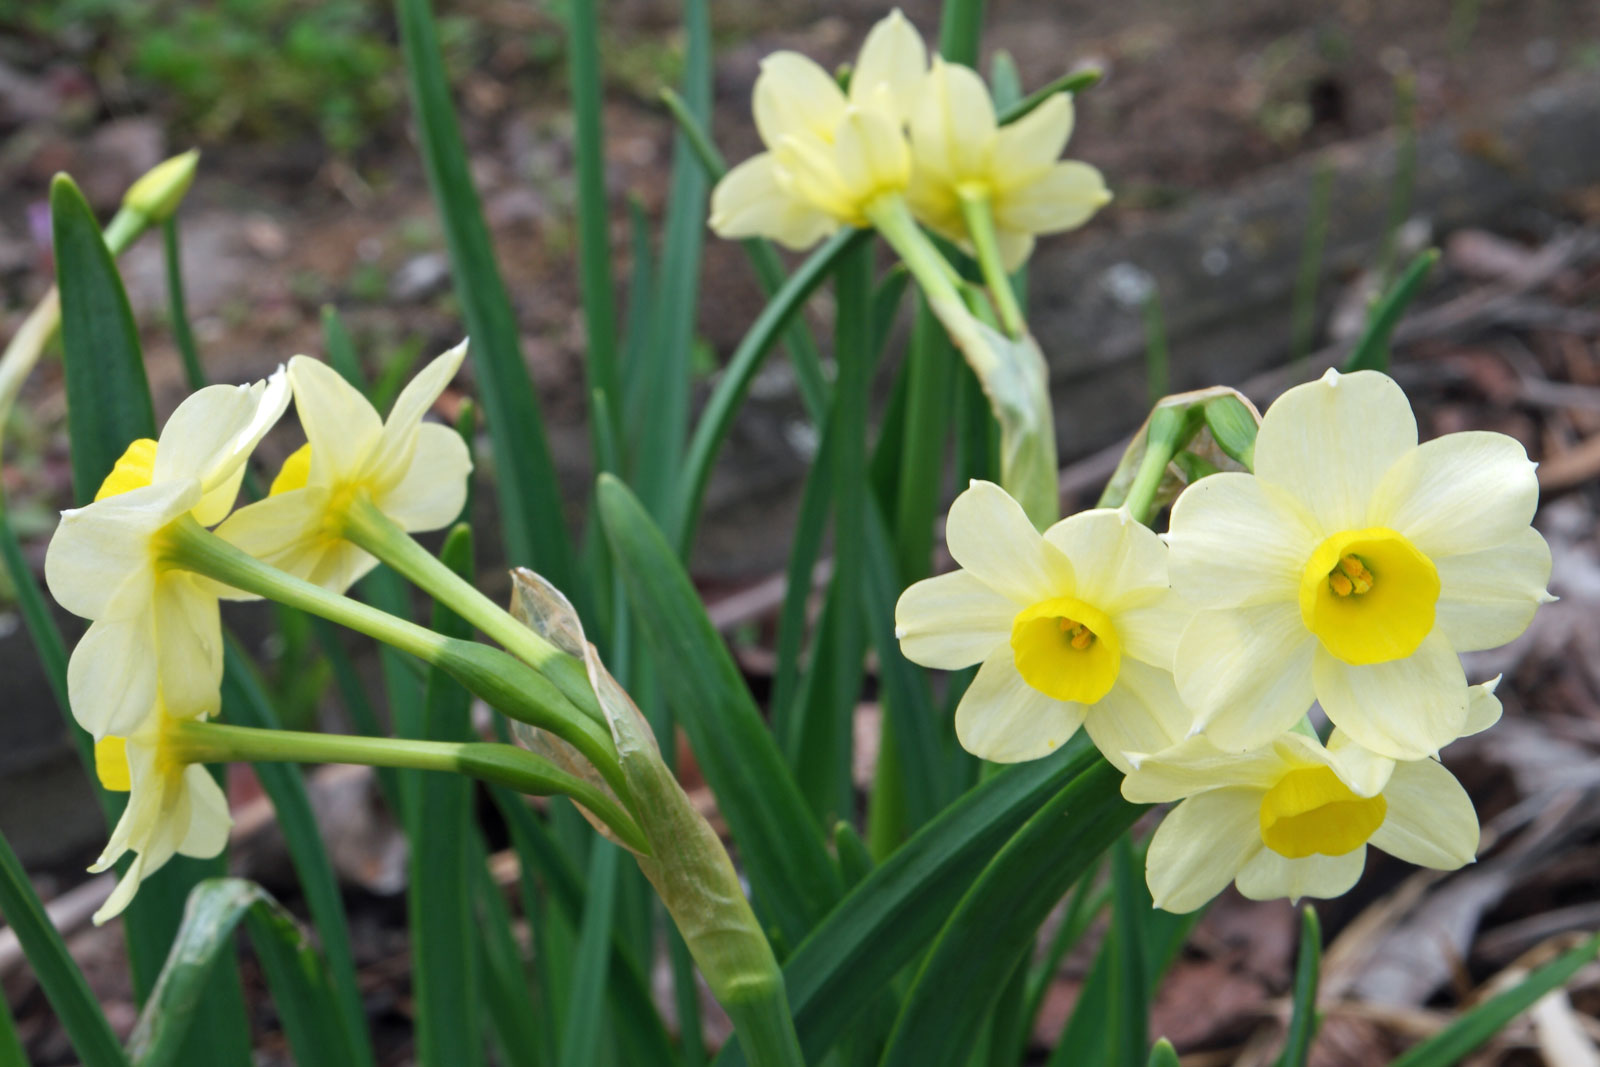 Narcissus Tazetta "Minnow" Pictures 